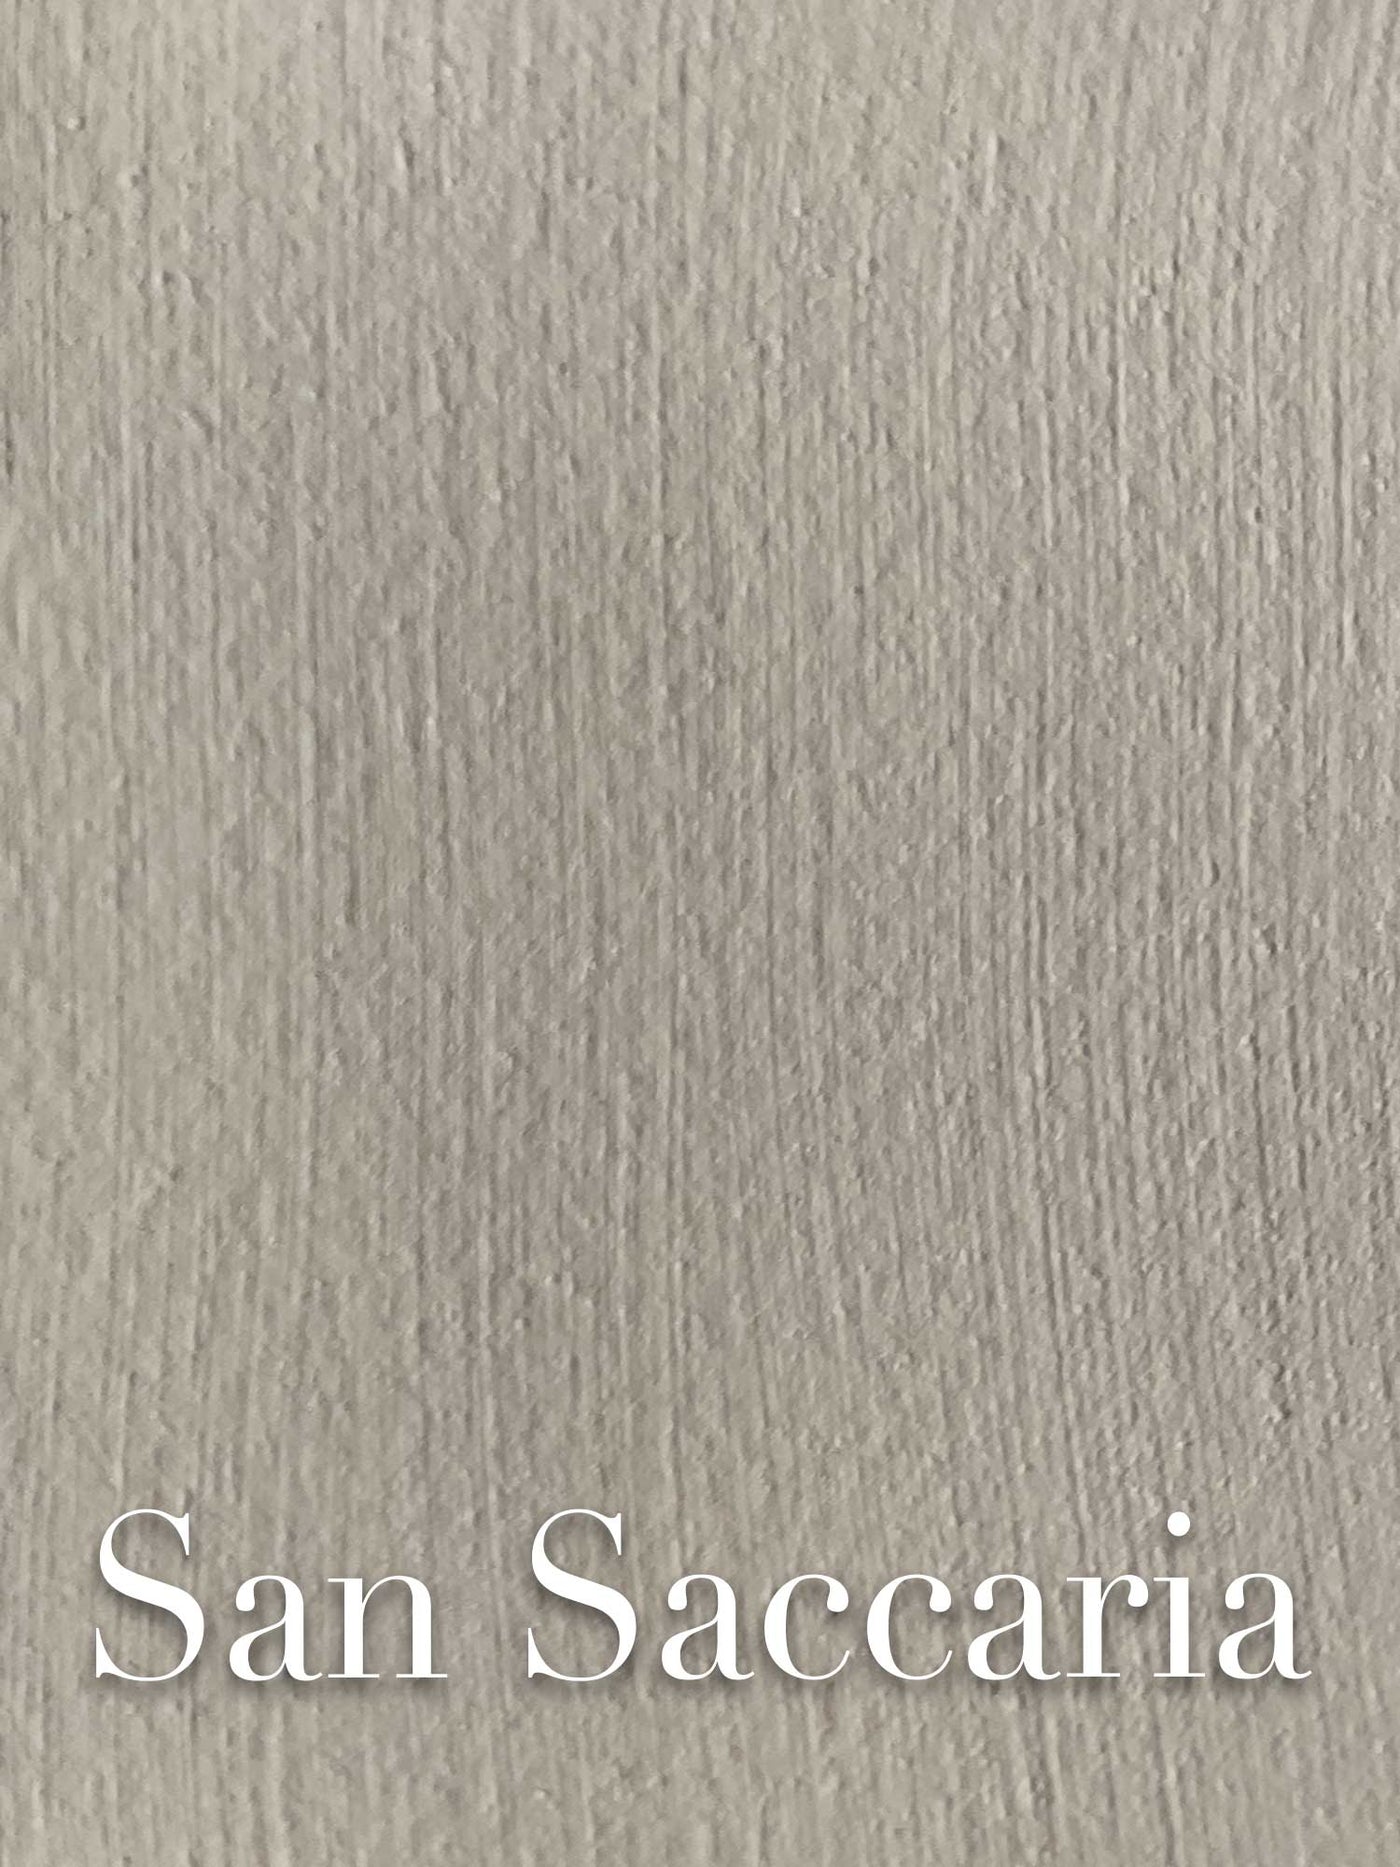 San Saccaria